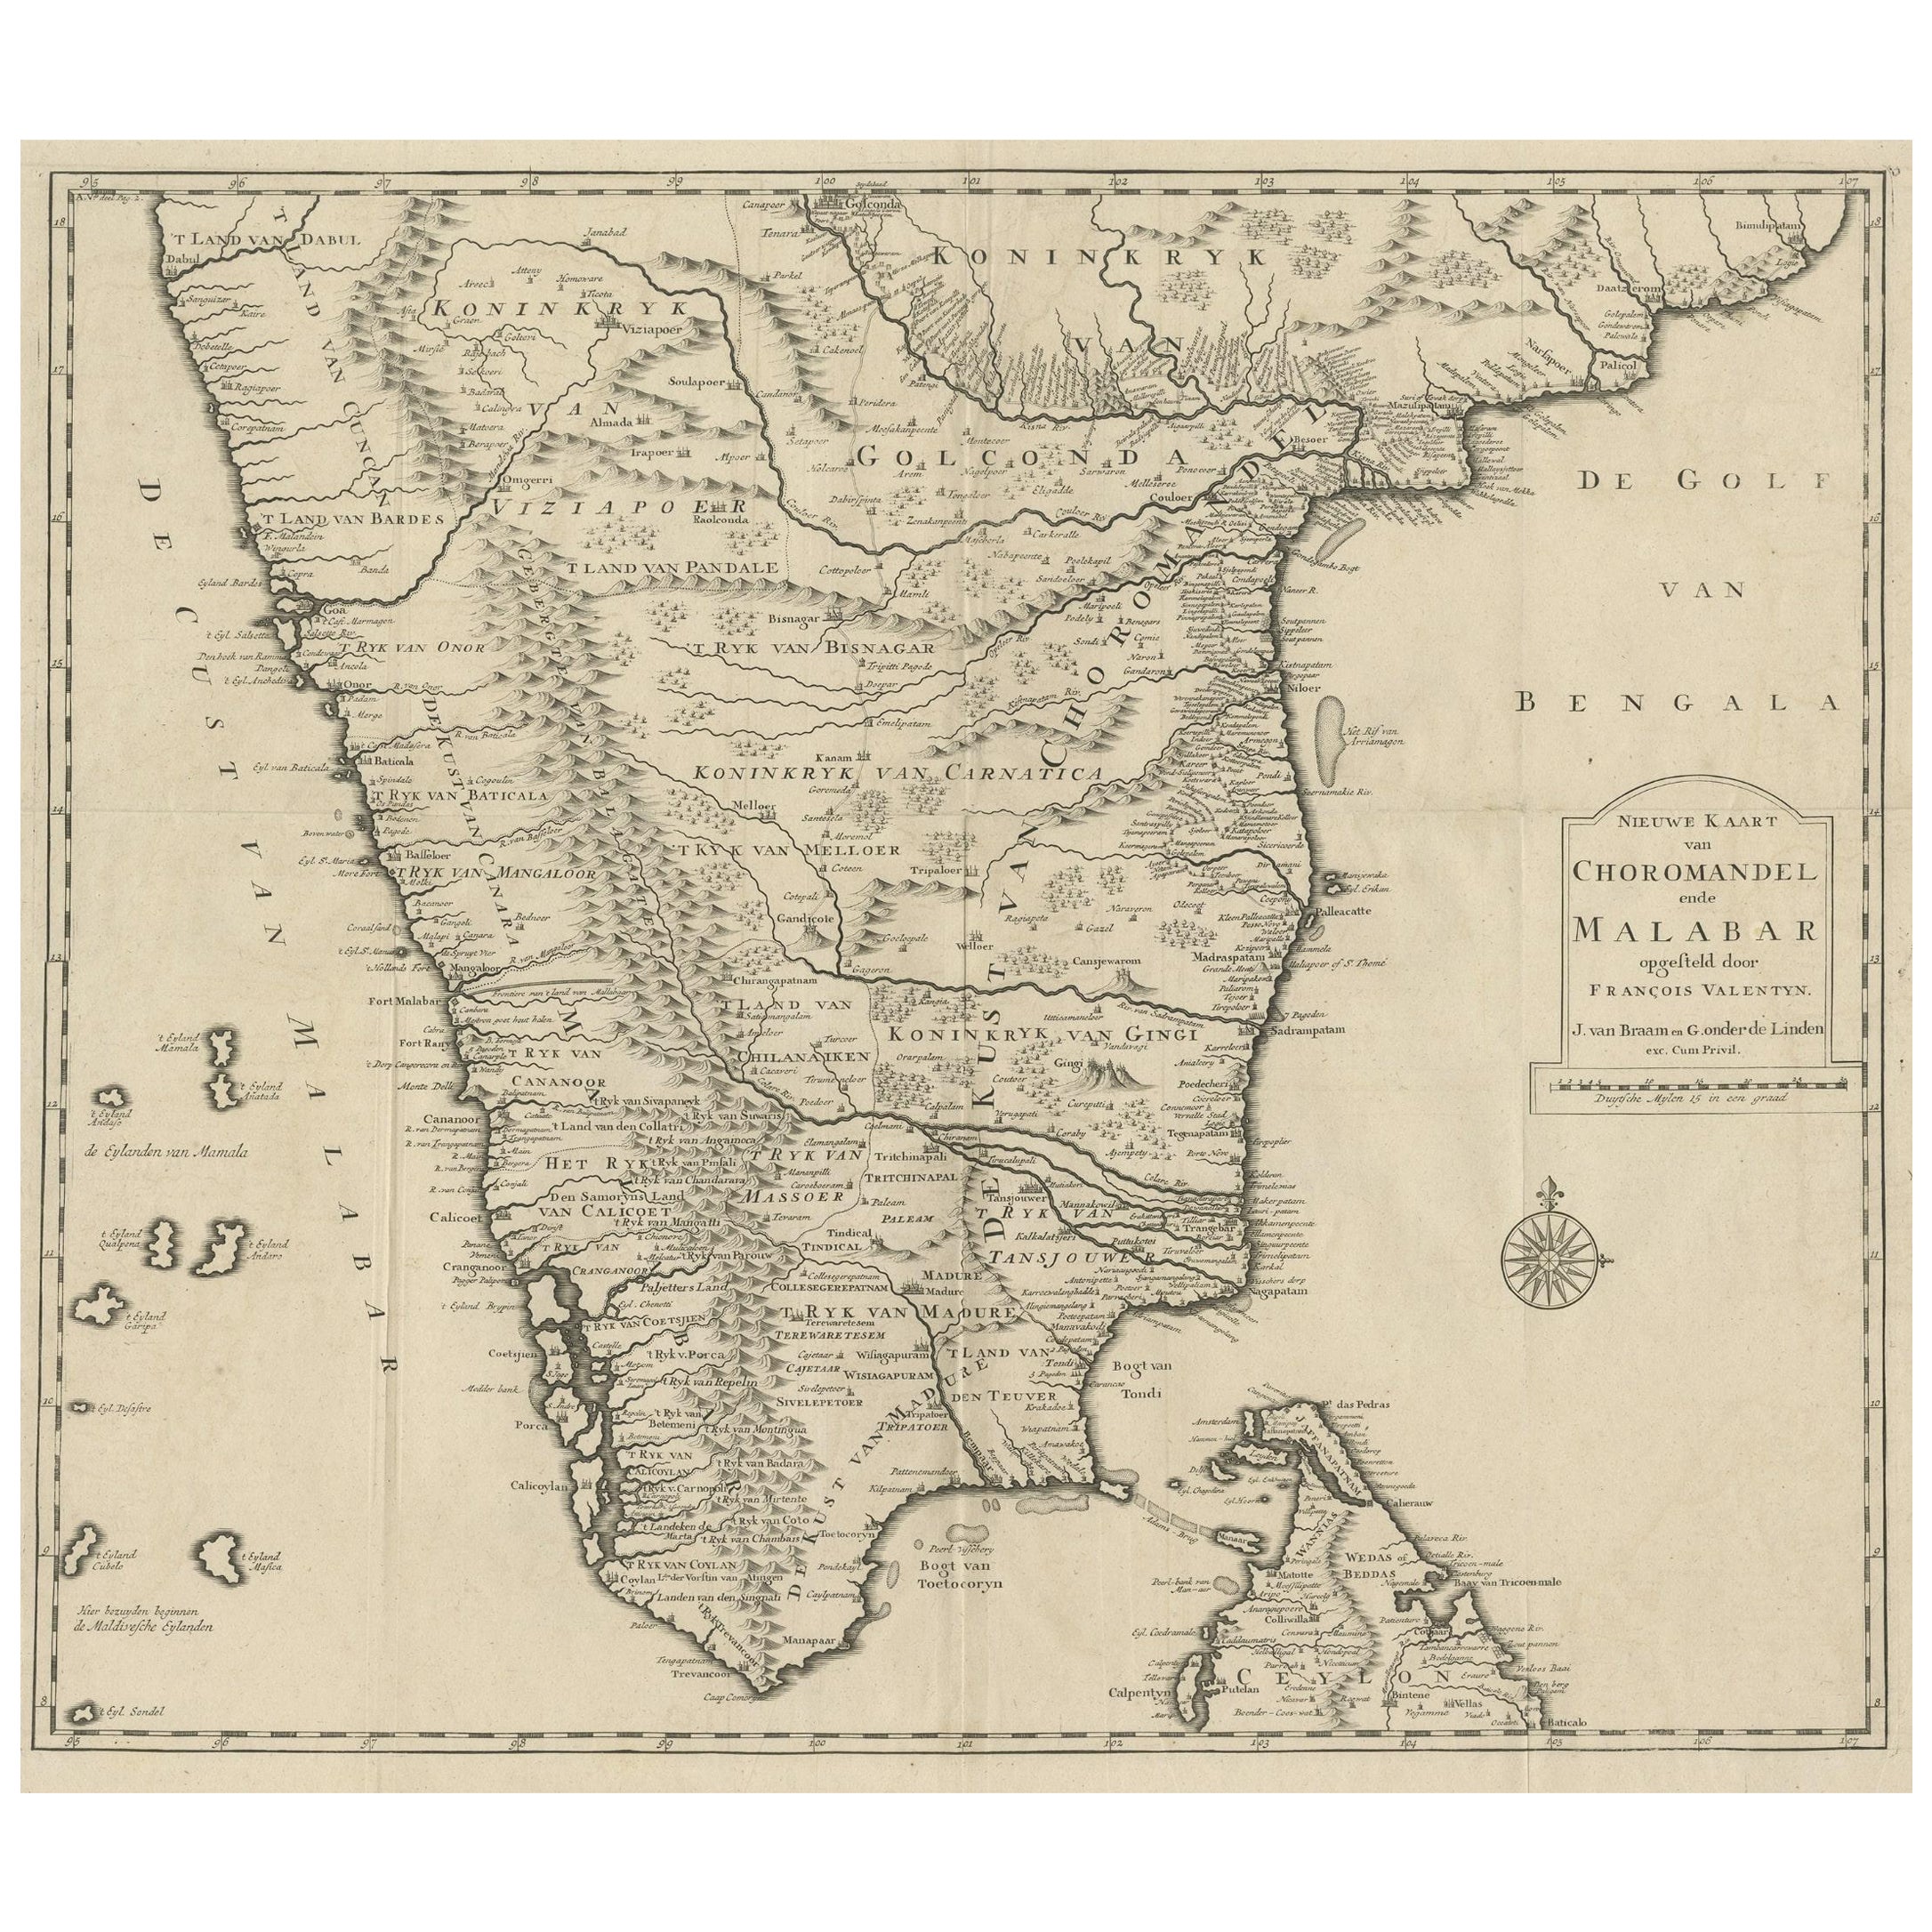 Carte de Choromandel & Malabar, Incl Kerala, Tamil Nadu et une partie du Sri Lanka, 1726